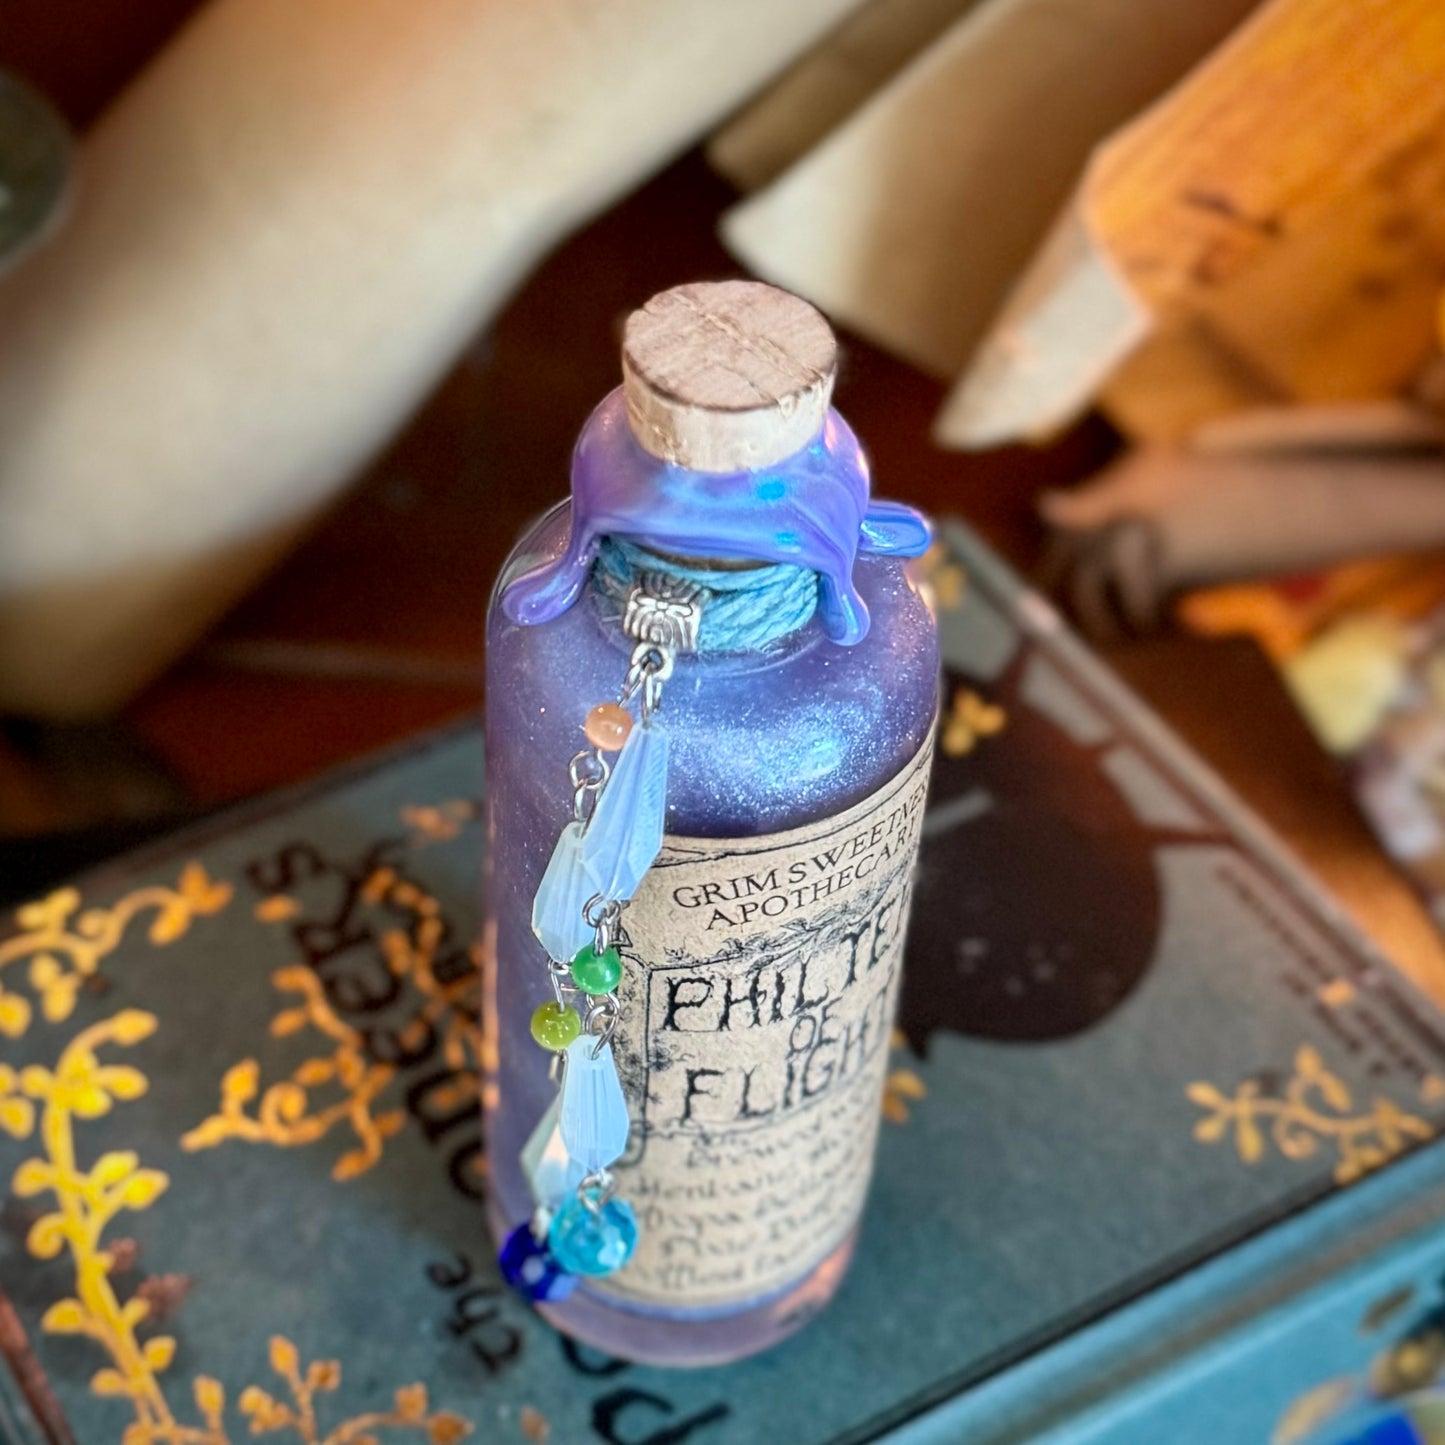 Philter of Flight, A Color Change Fairy Potion Bottle Prop